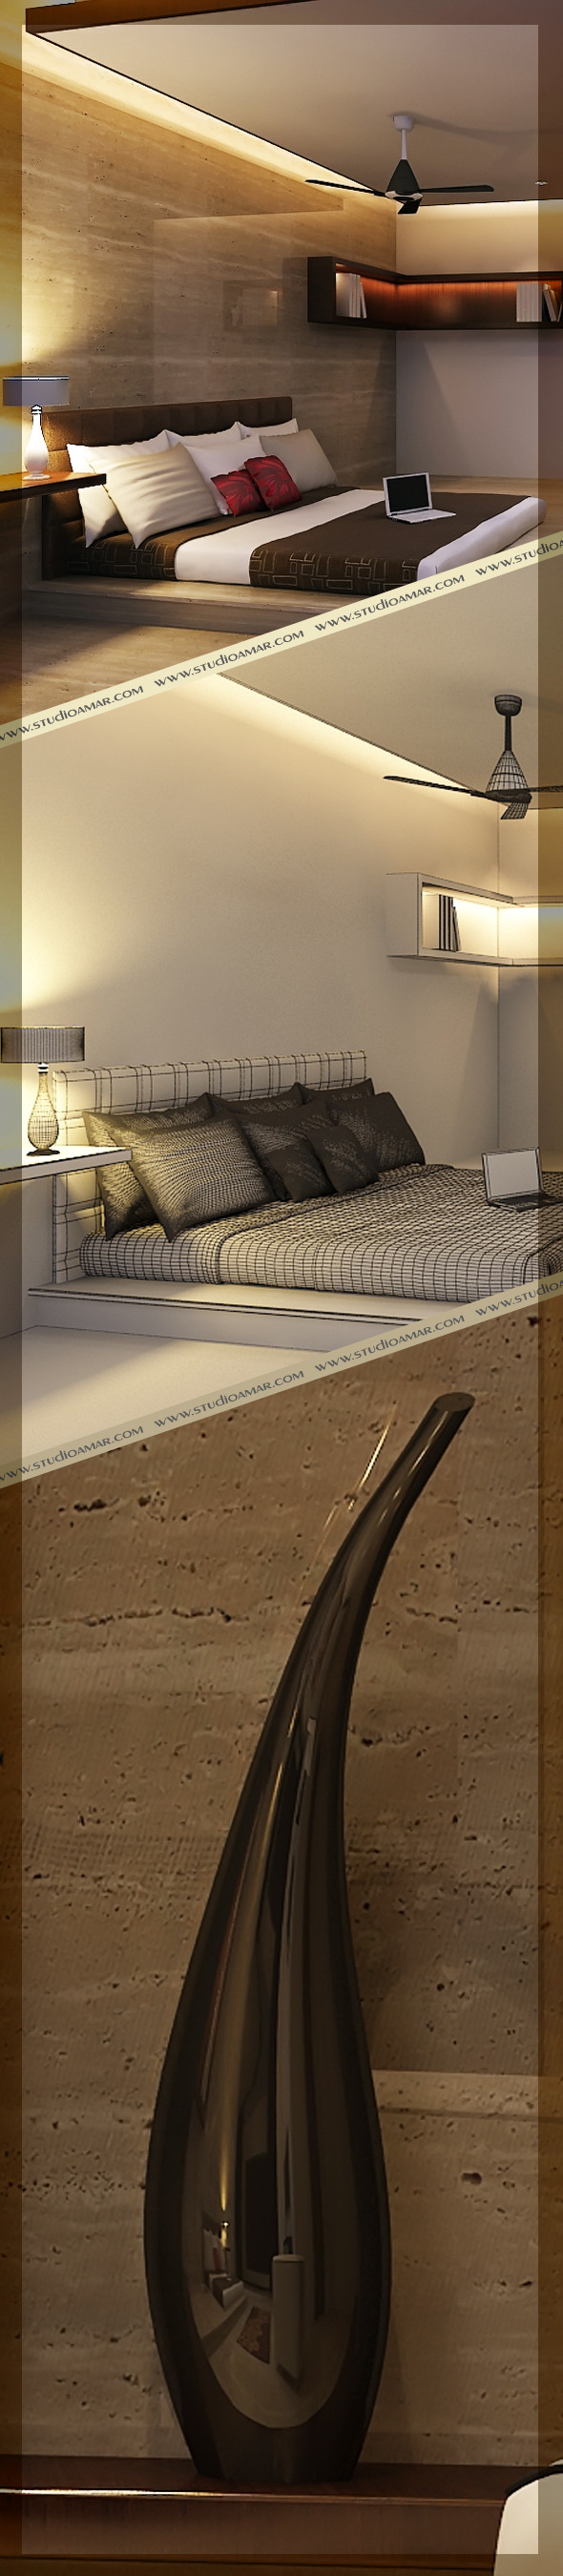 Realistic Bed Room - 3Docean 7407703